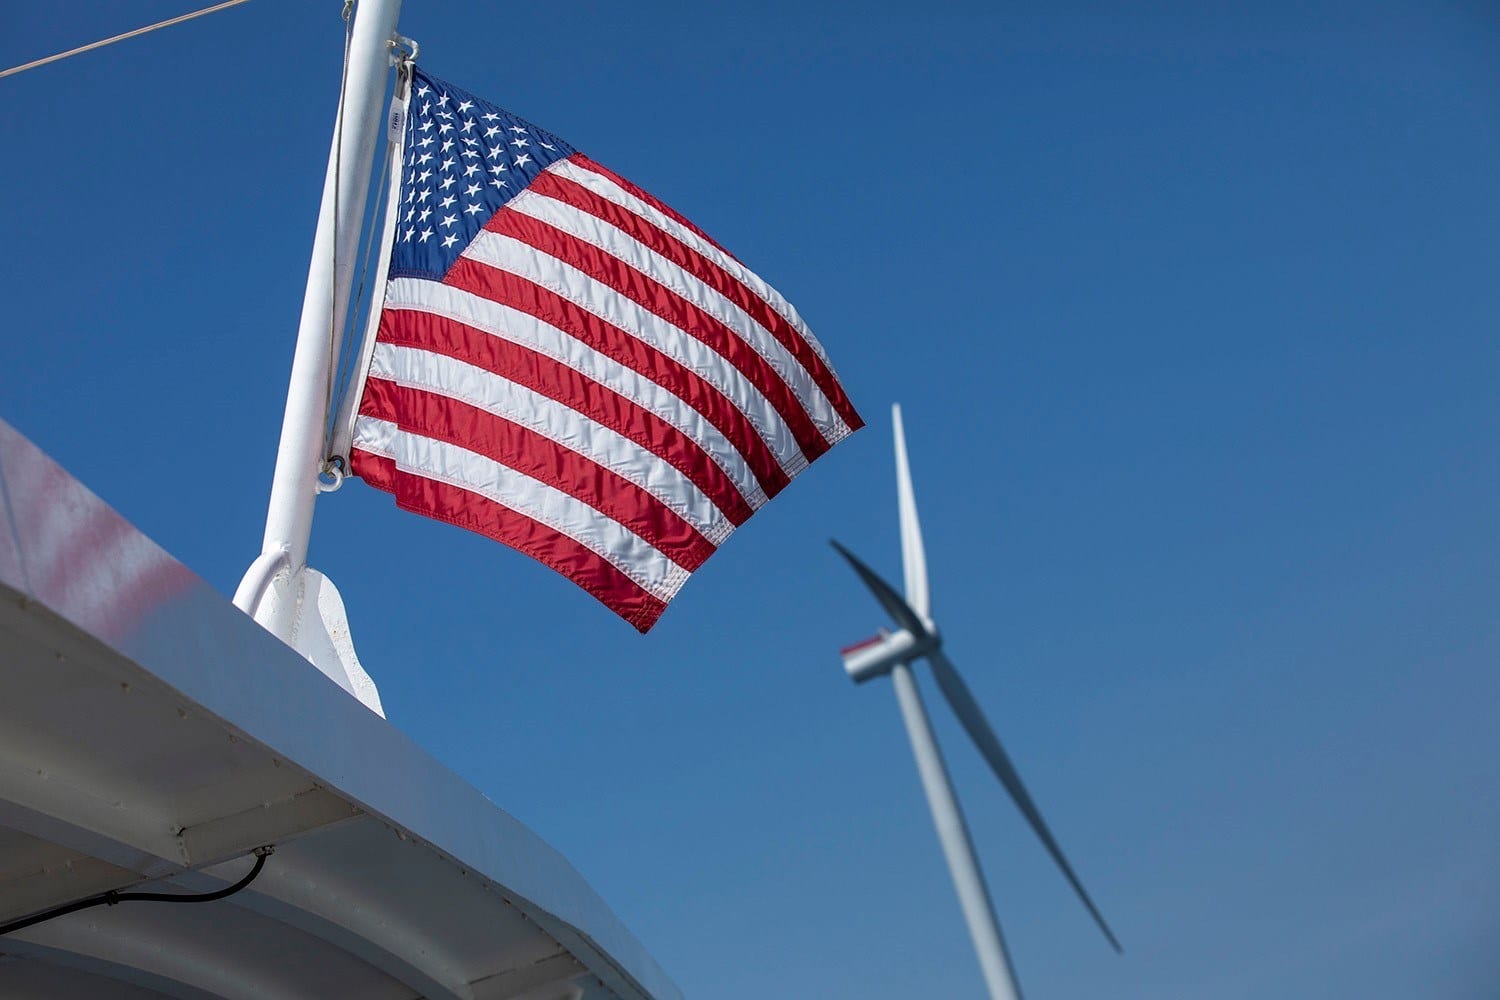 A wind turbine Dominion Energy’s two turbine Coastal Virginia Offshore Wind (CVOW) pilot project. Photo: Dominion Energy